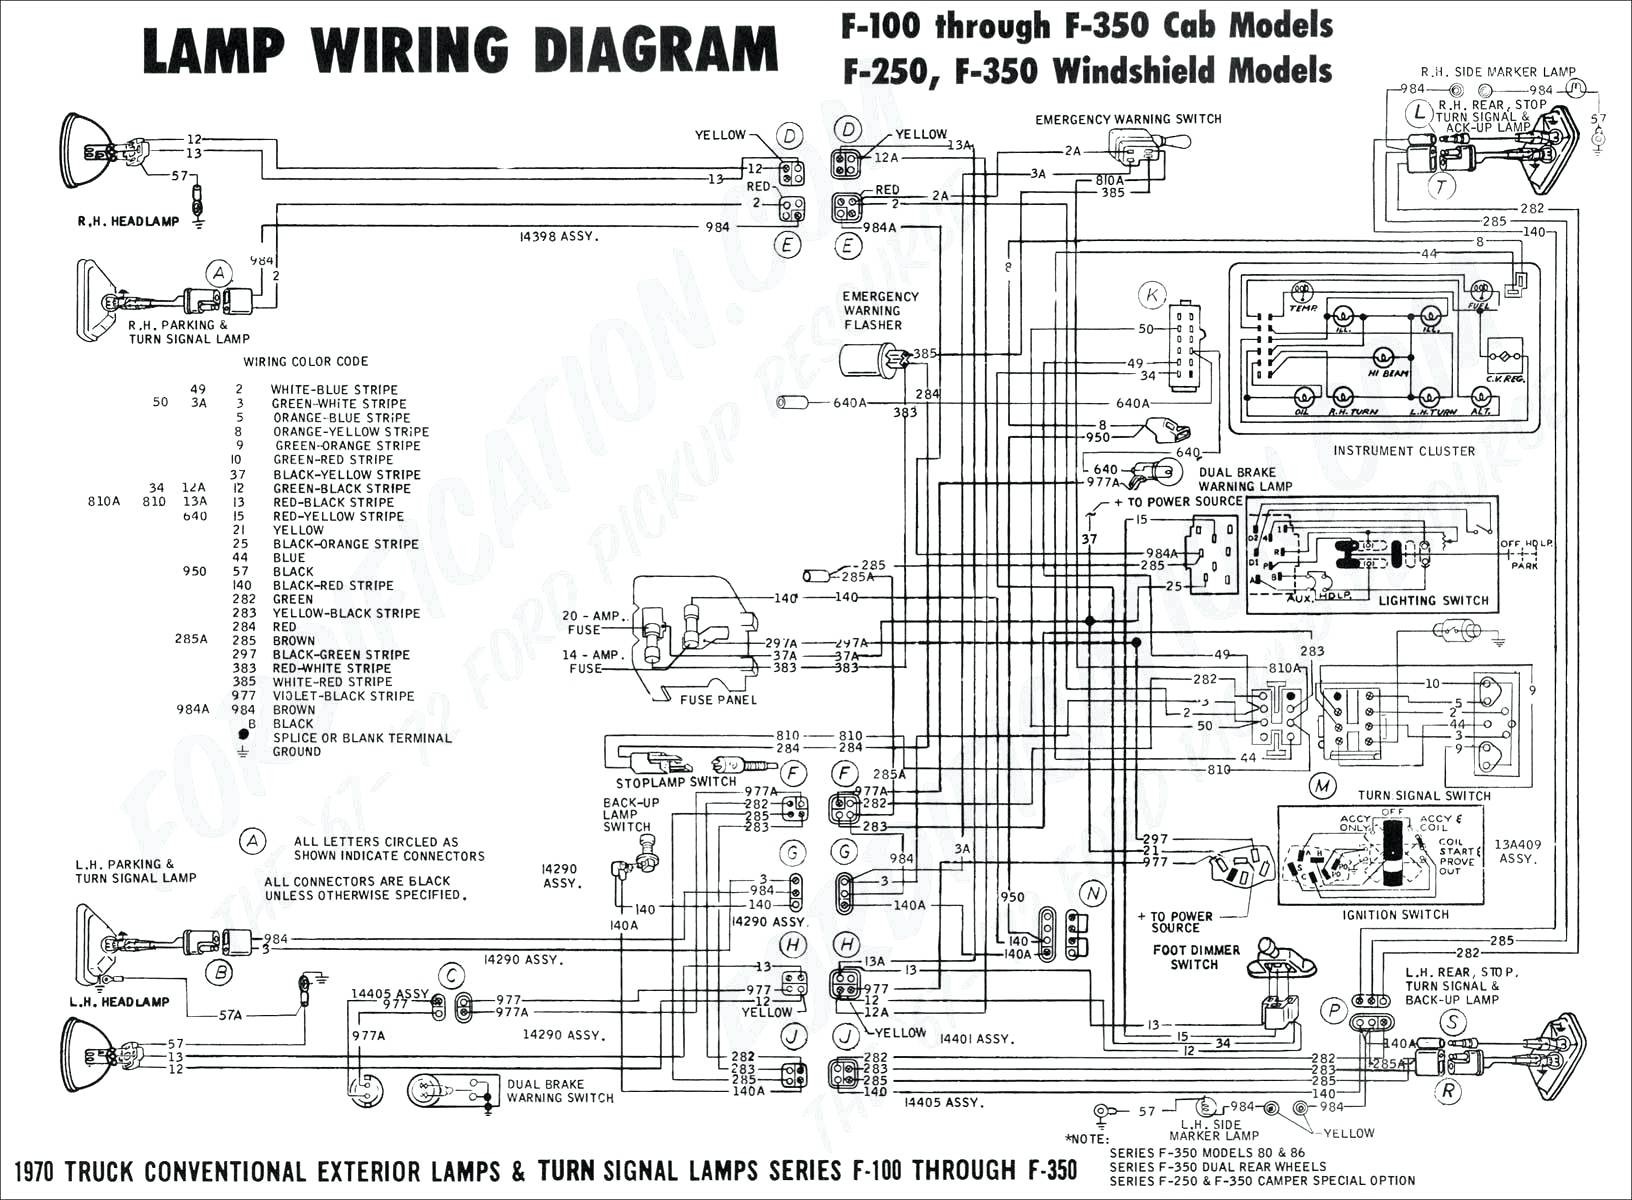 2002 dodge ram 1500 abs wiring diagram new 2002 dodge ram stereo rh yesonm info 05 BMW 7 Series Starter Wiring Diagram 05 BMW 7 Series Starter Wiring